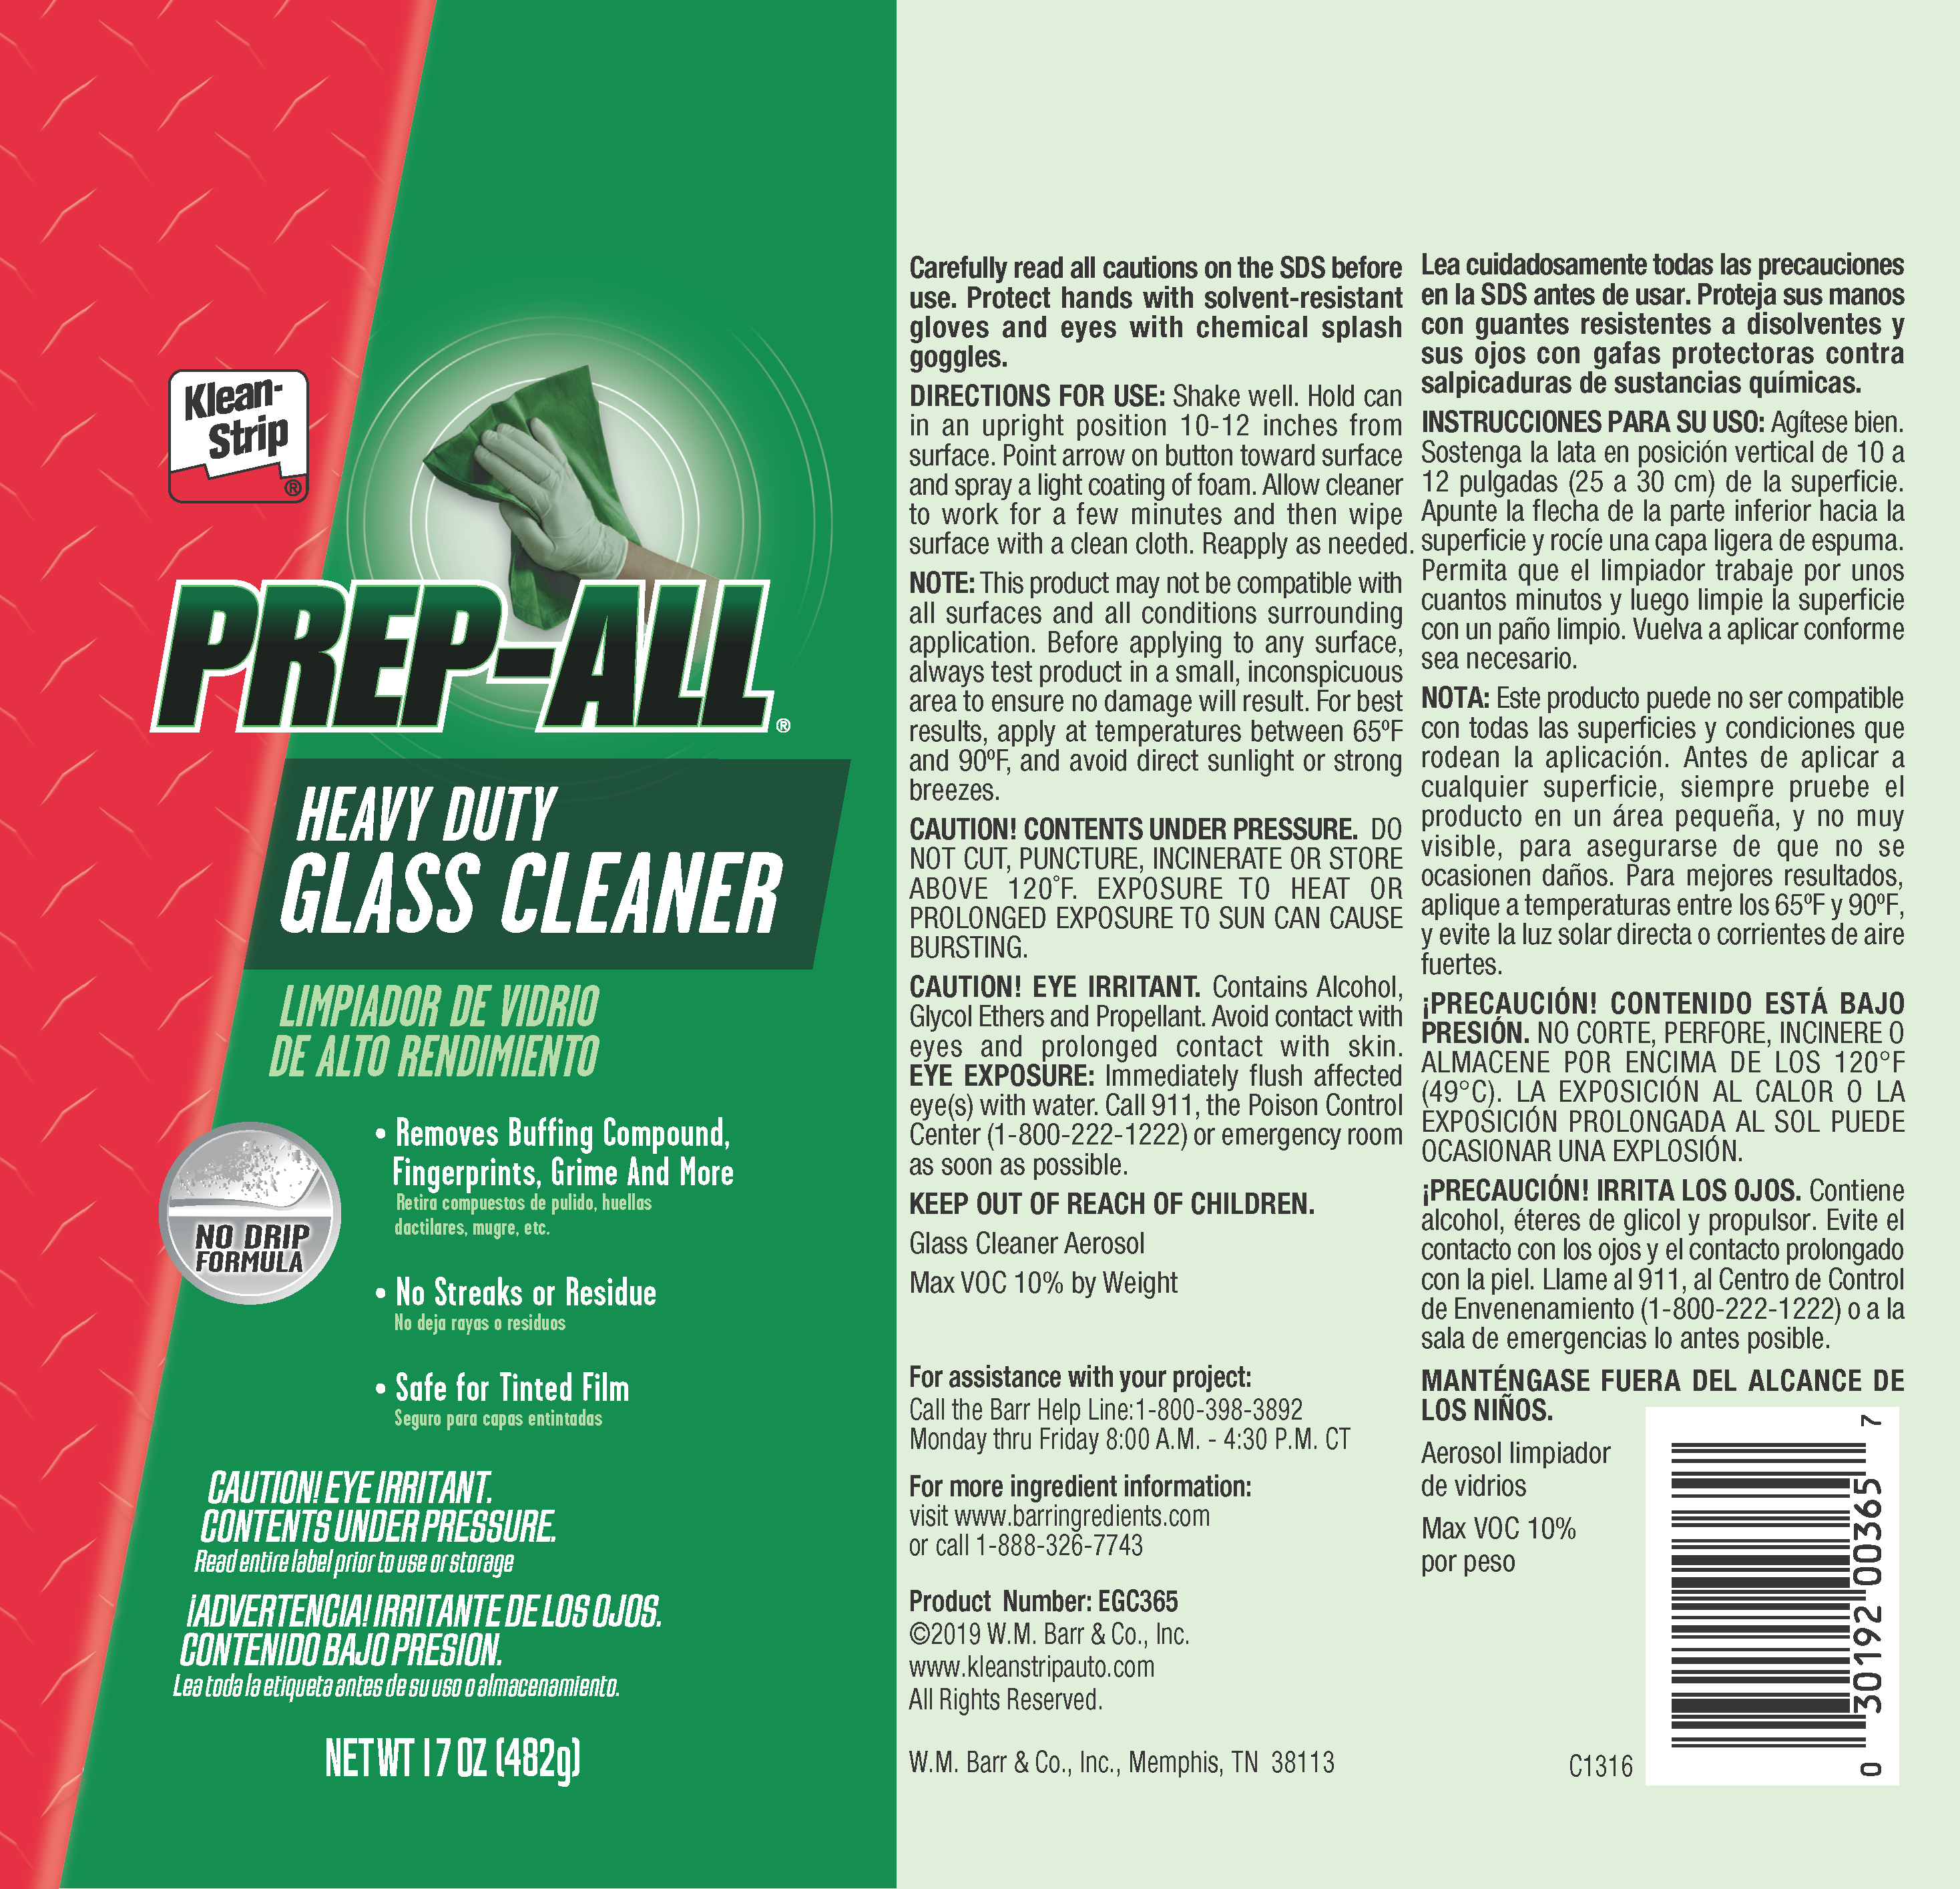 Klean-Strip Prep-All Heavy Duty Glass Cleaner